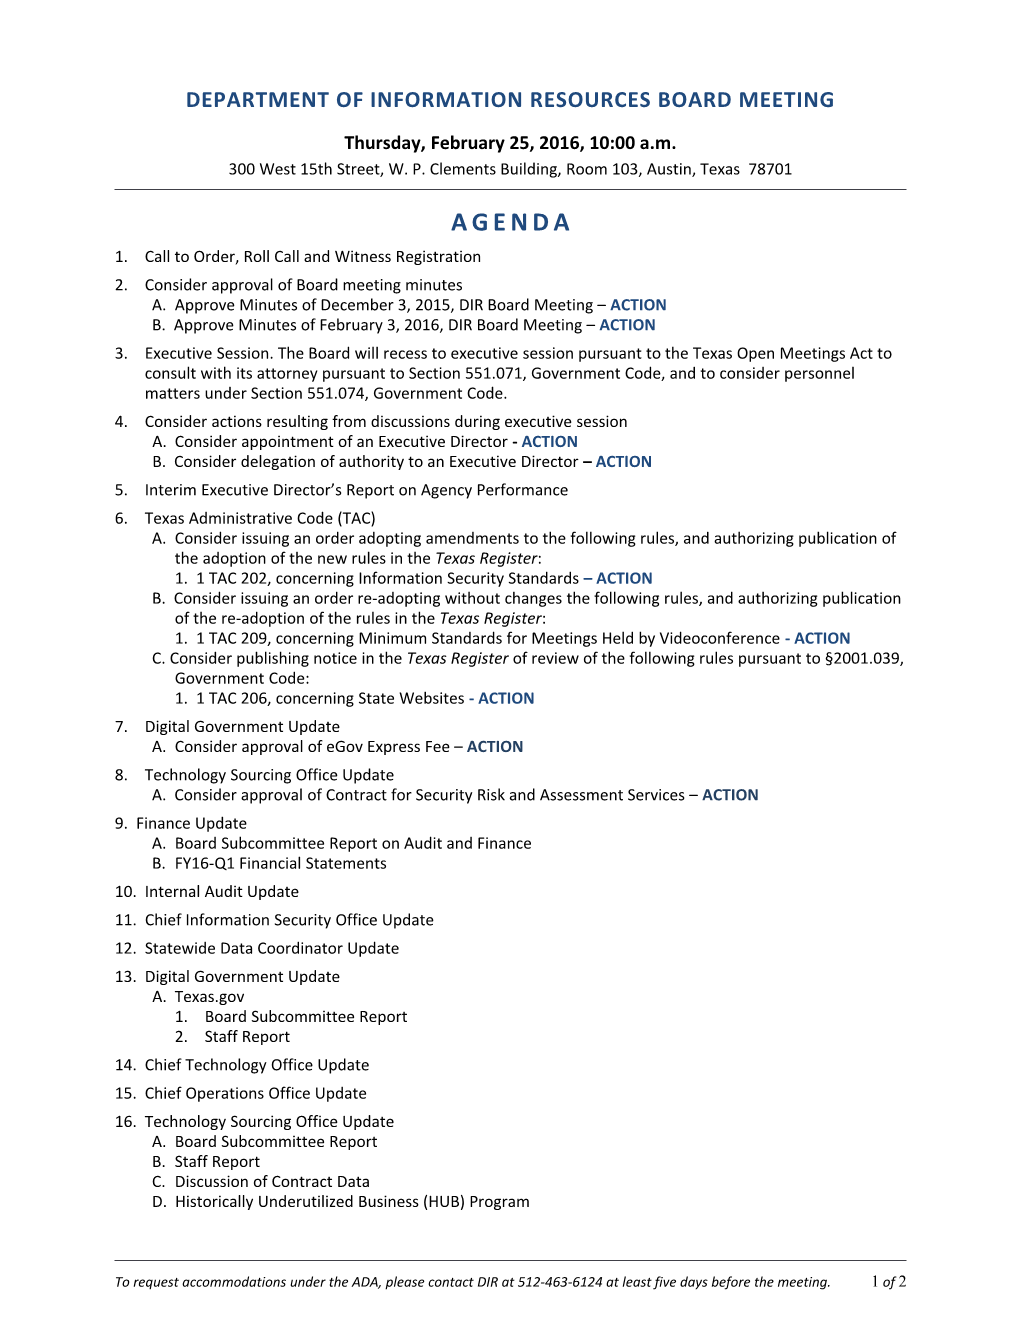 Board Meeting Agenda - 2016 Feb 25